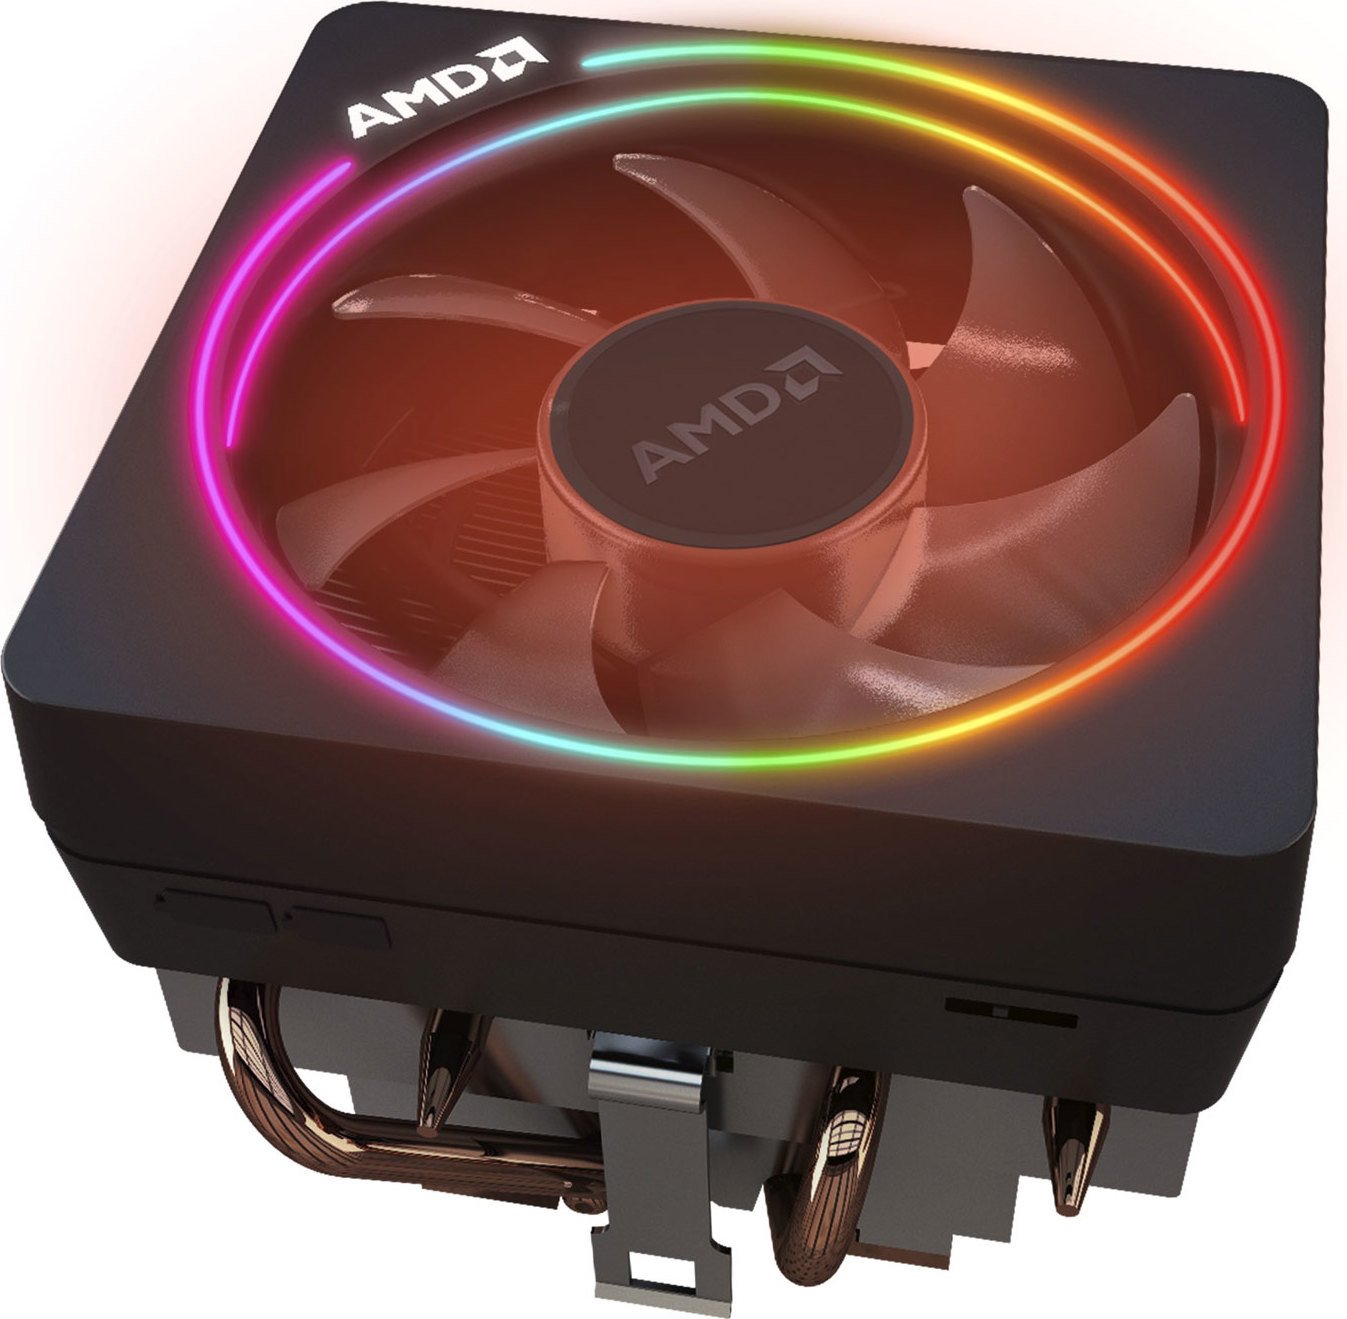 AMD Ryzen 7 7700, 8C/16T, 3.80-5.30GHz, boxed